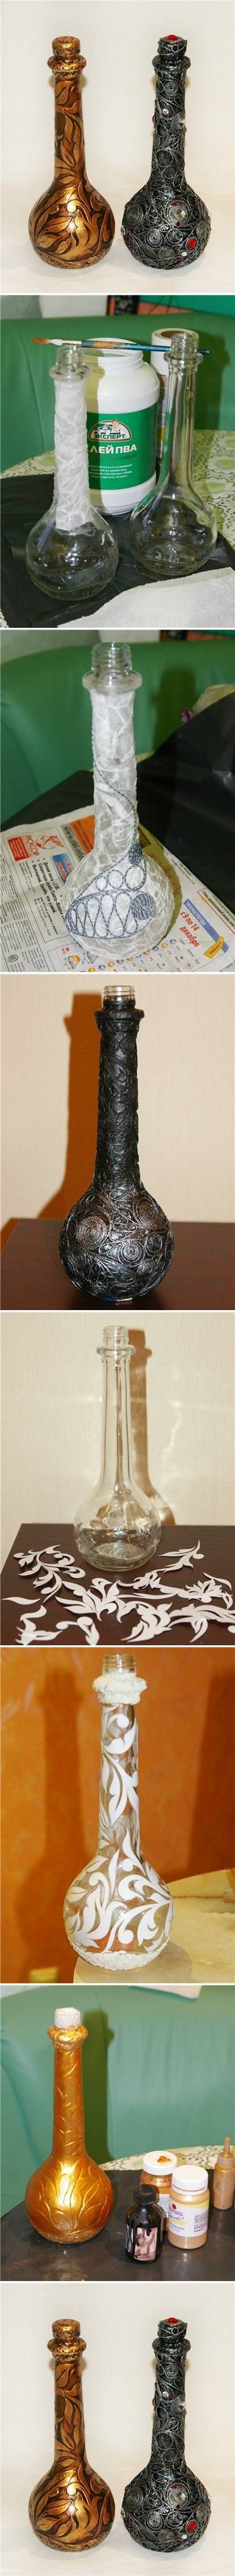 DIY Decorated Wine Bottle